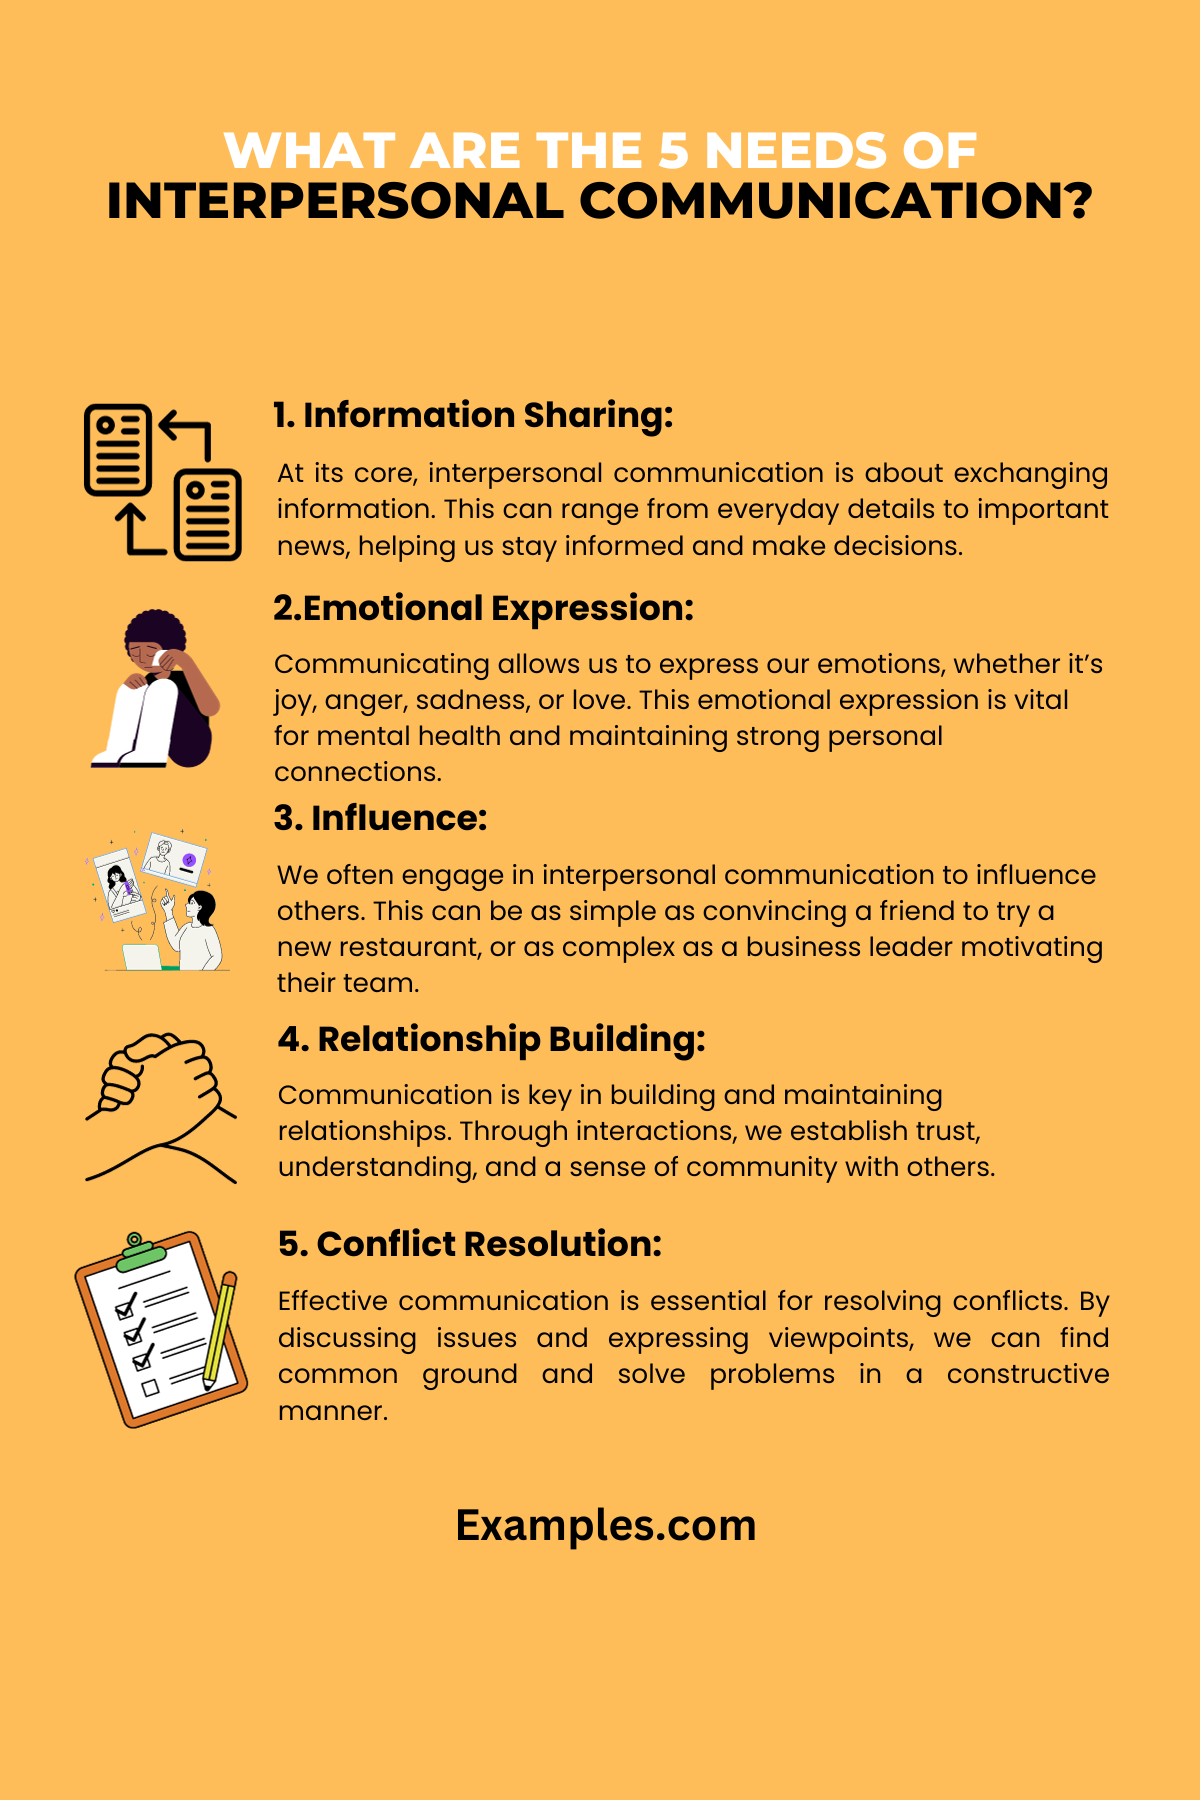 5 needs of interpersonal communication